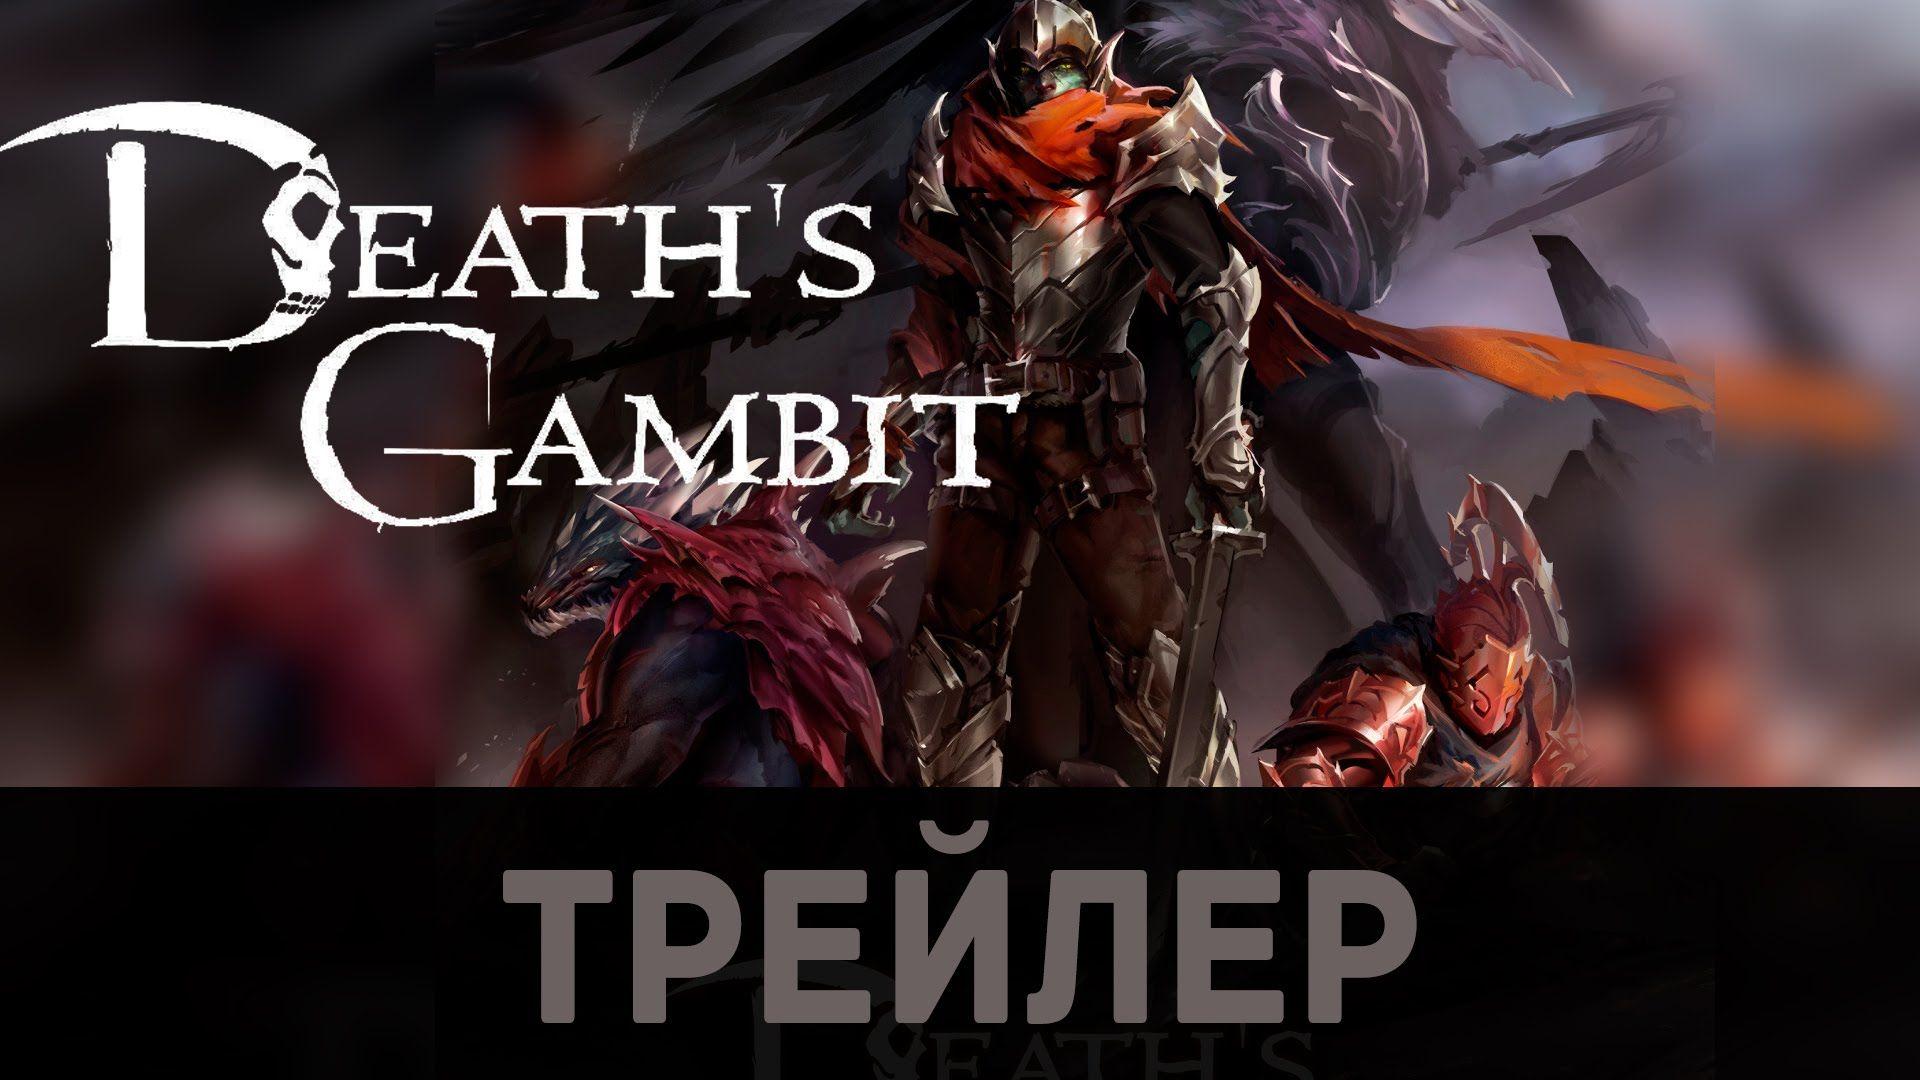 Video Game Death's Gambit HD Wallpaper